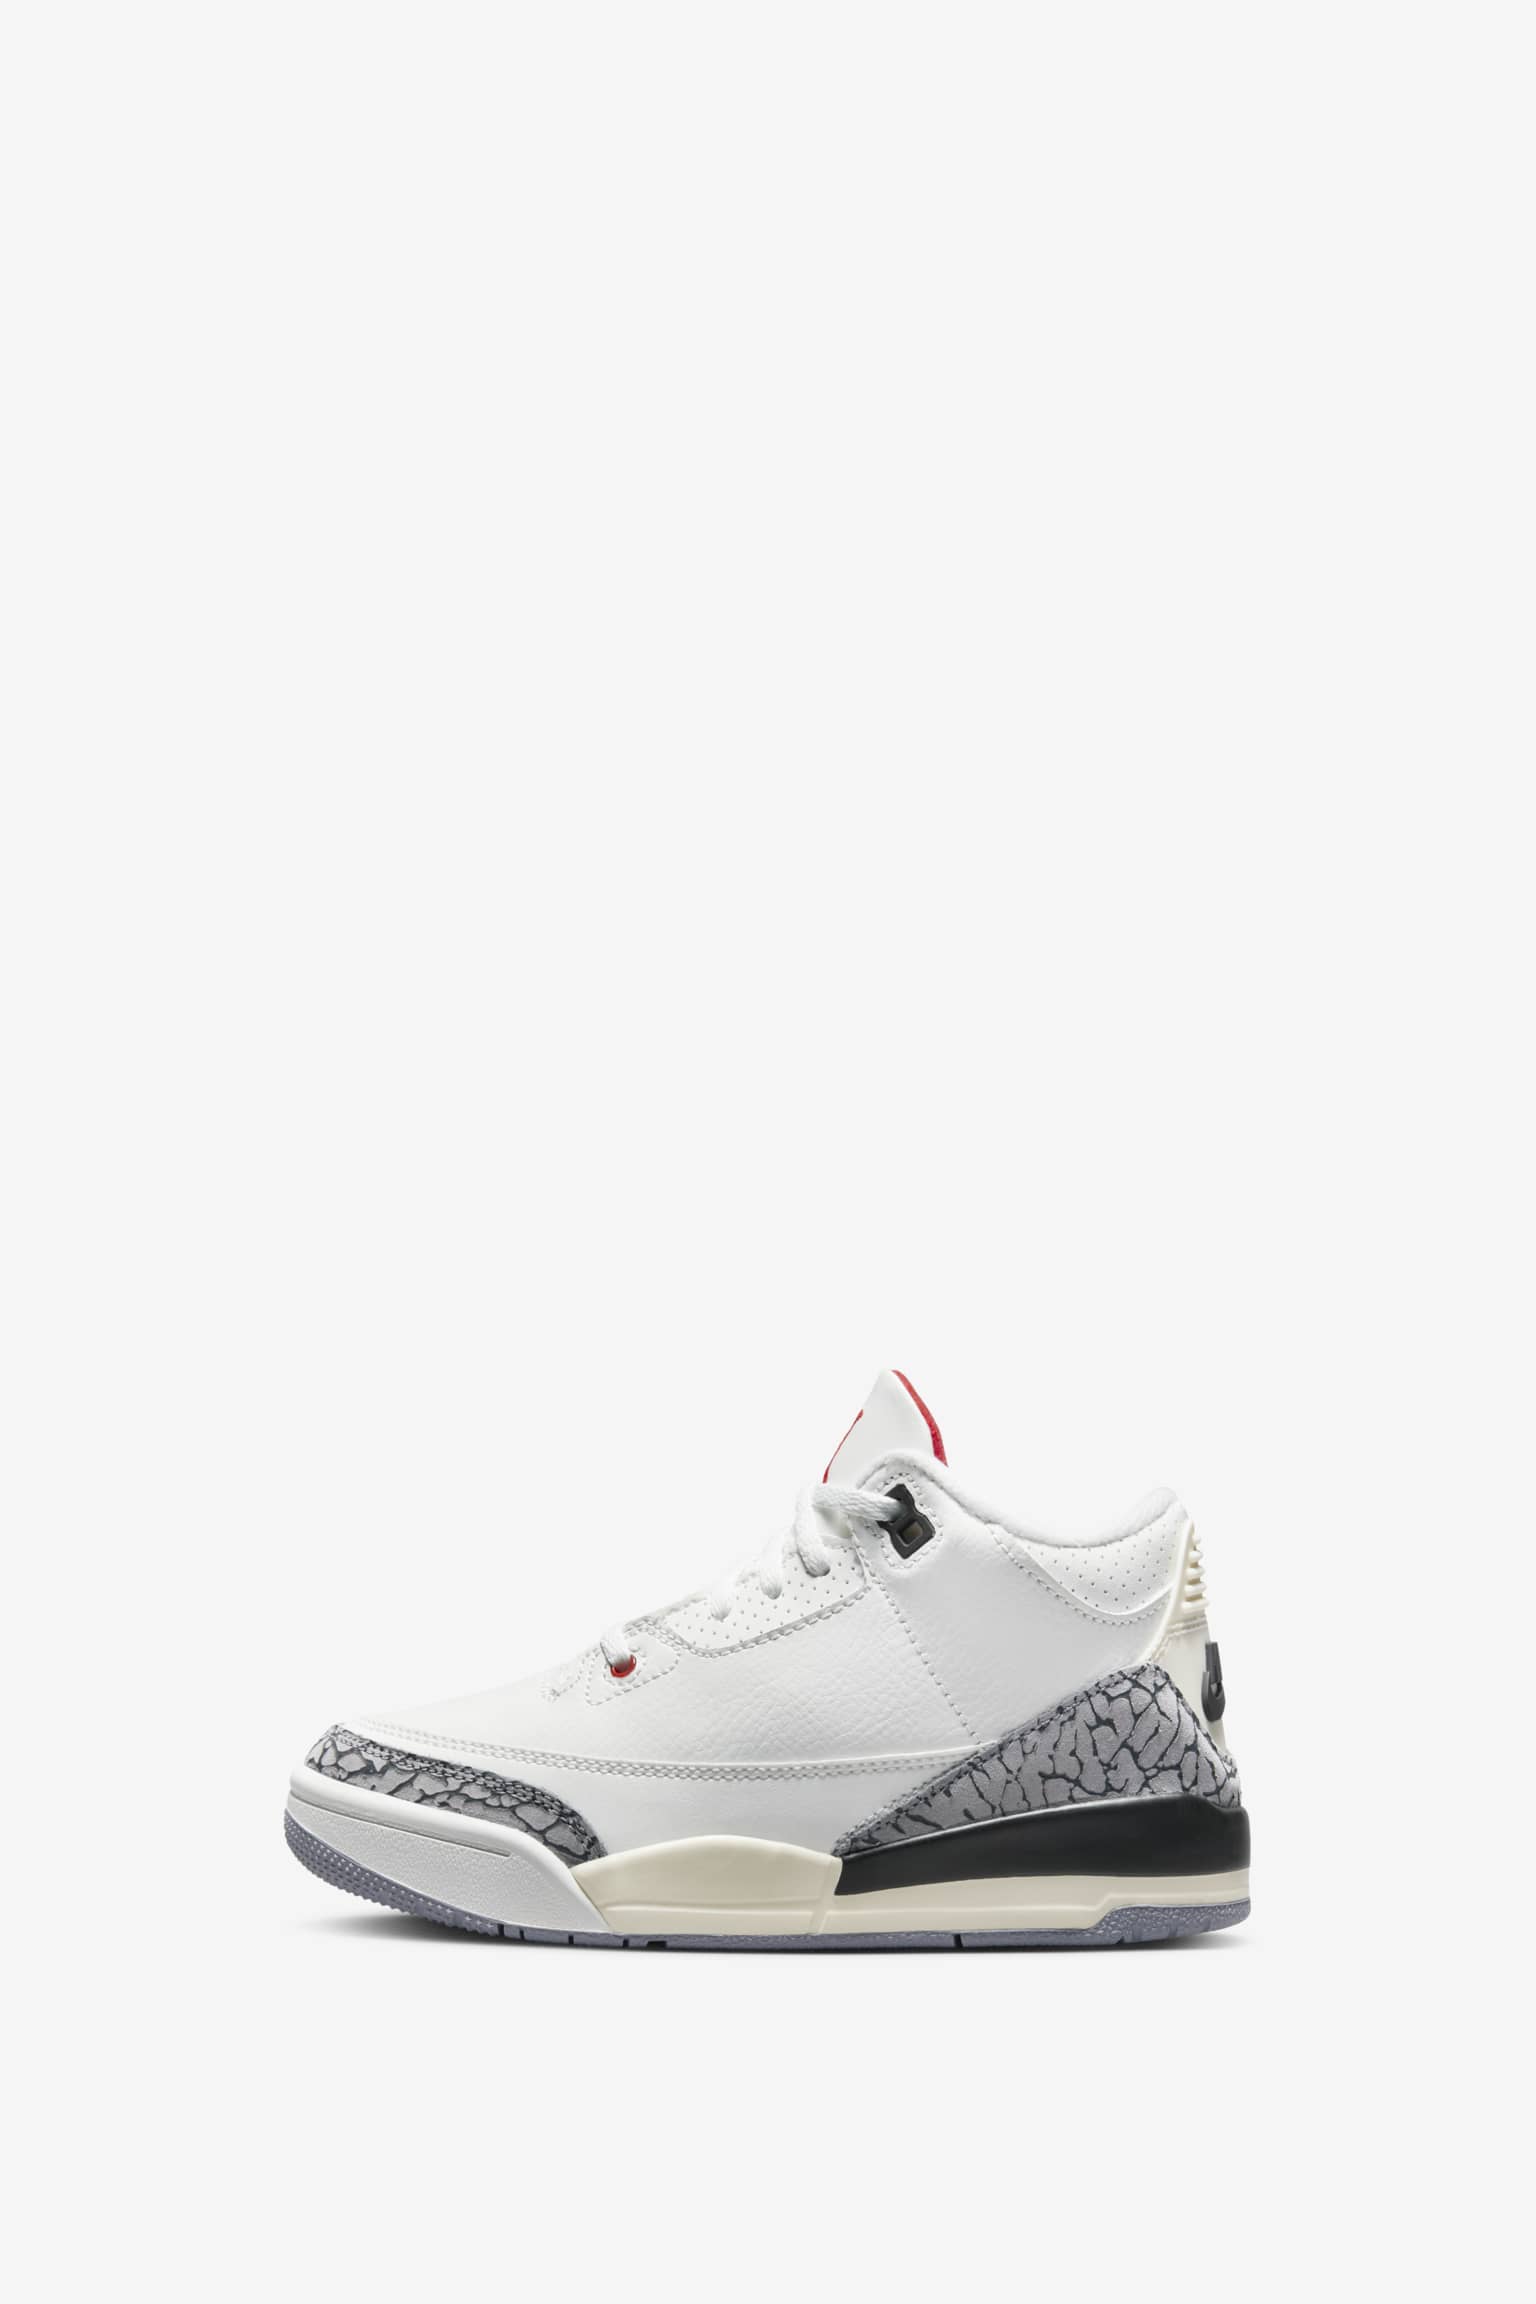 Nike Air Jordan3 White Cement Reimagined